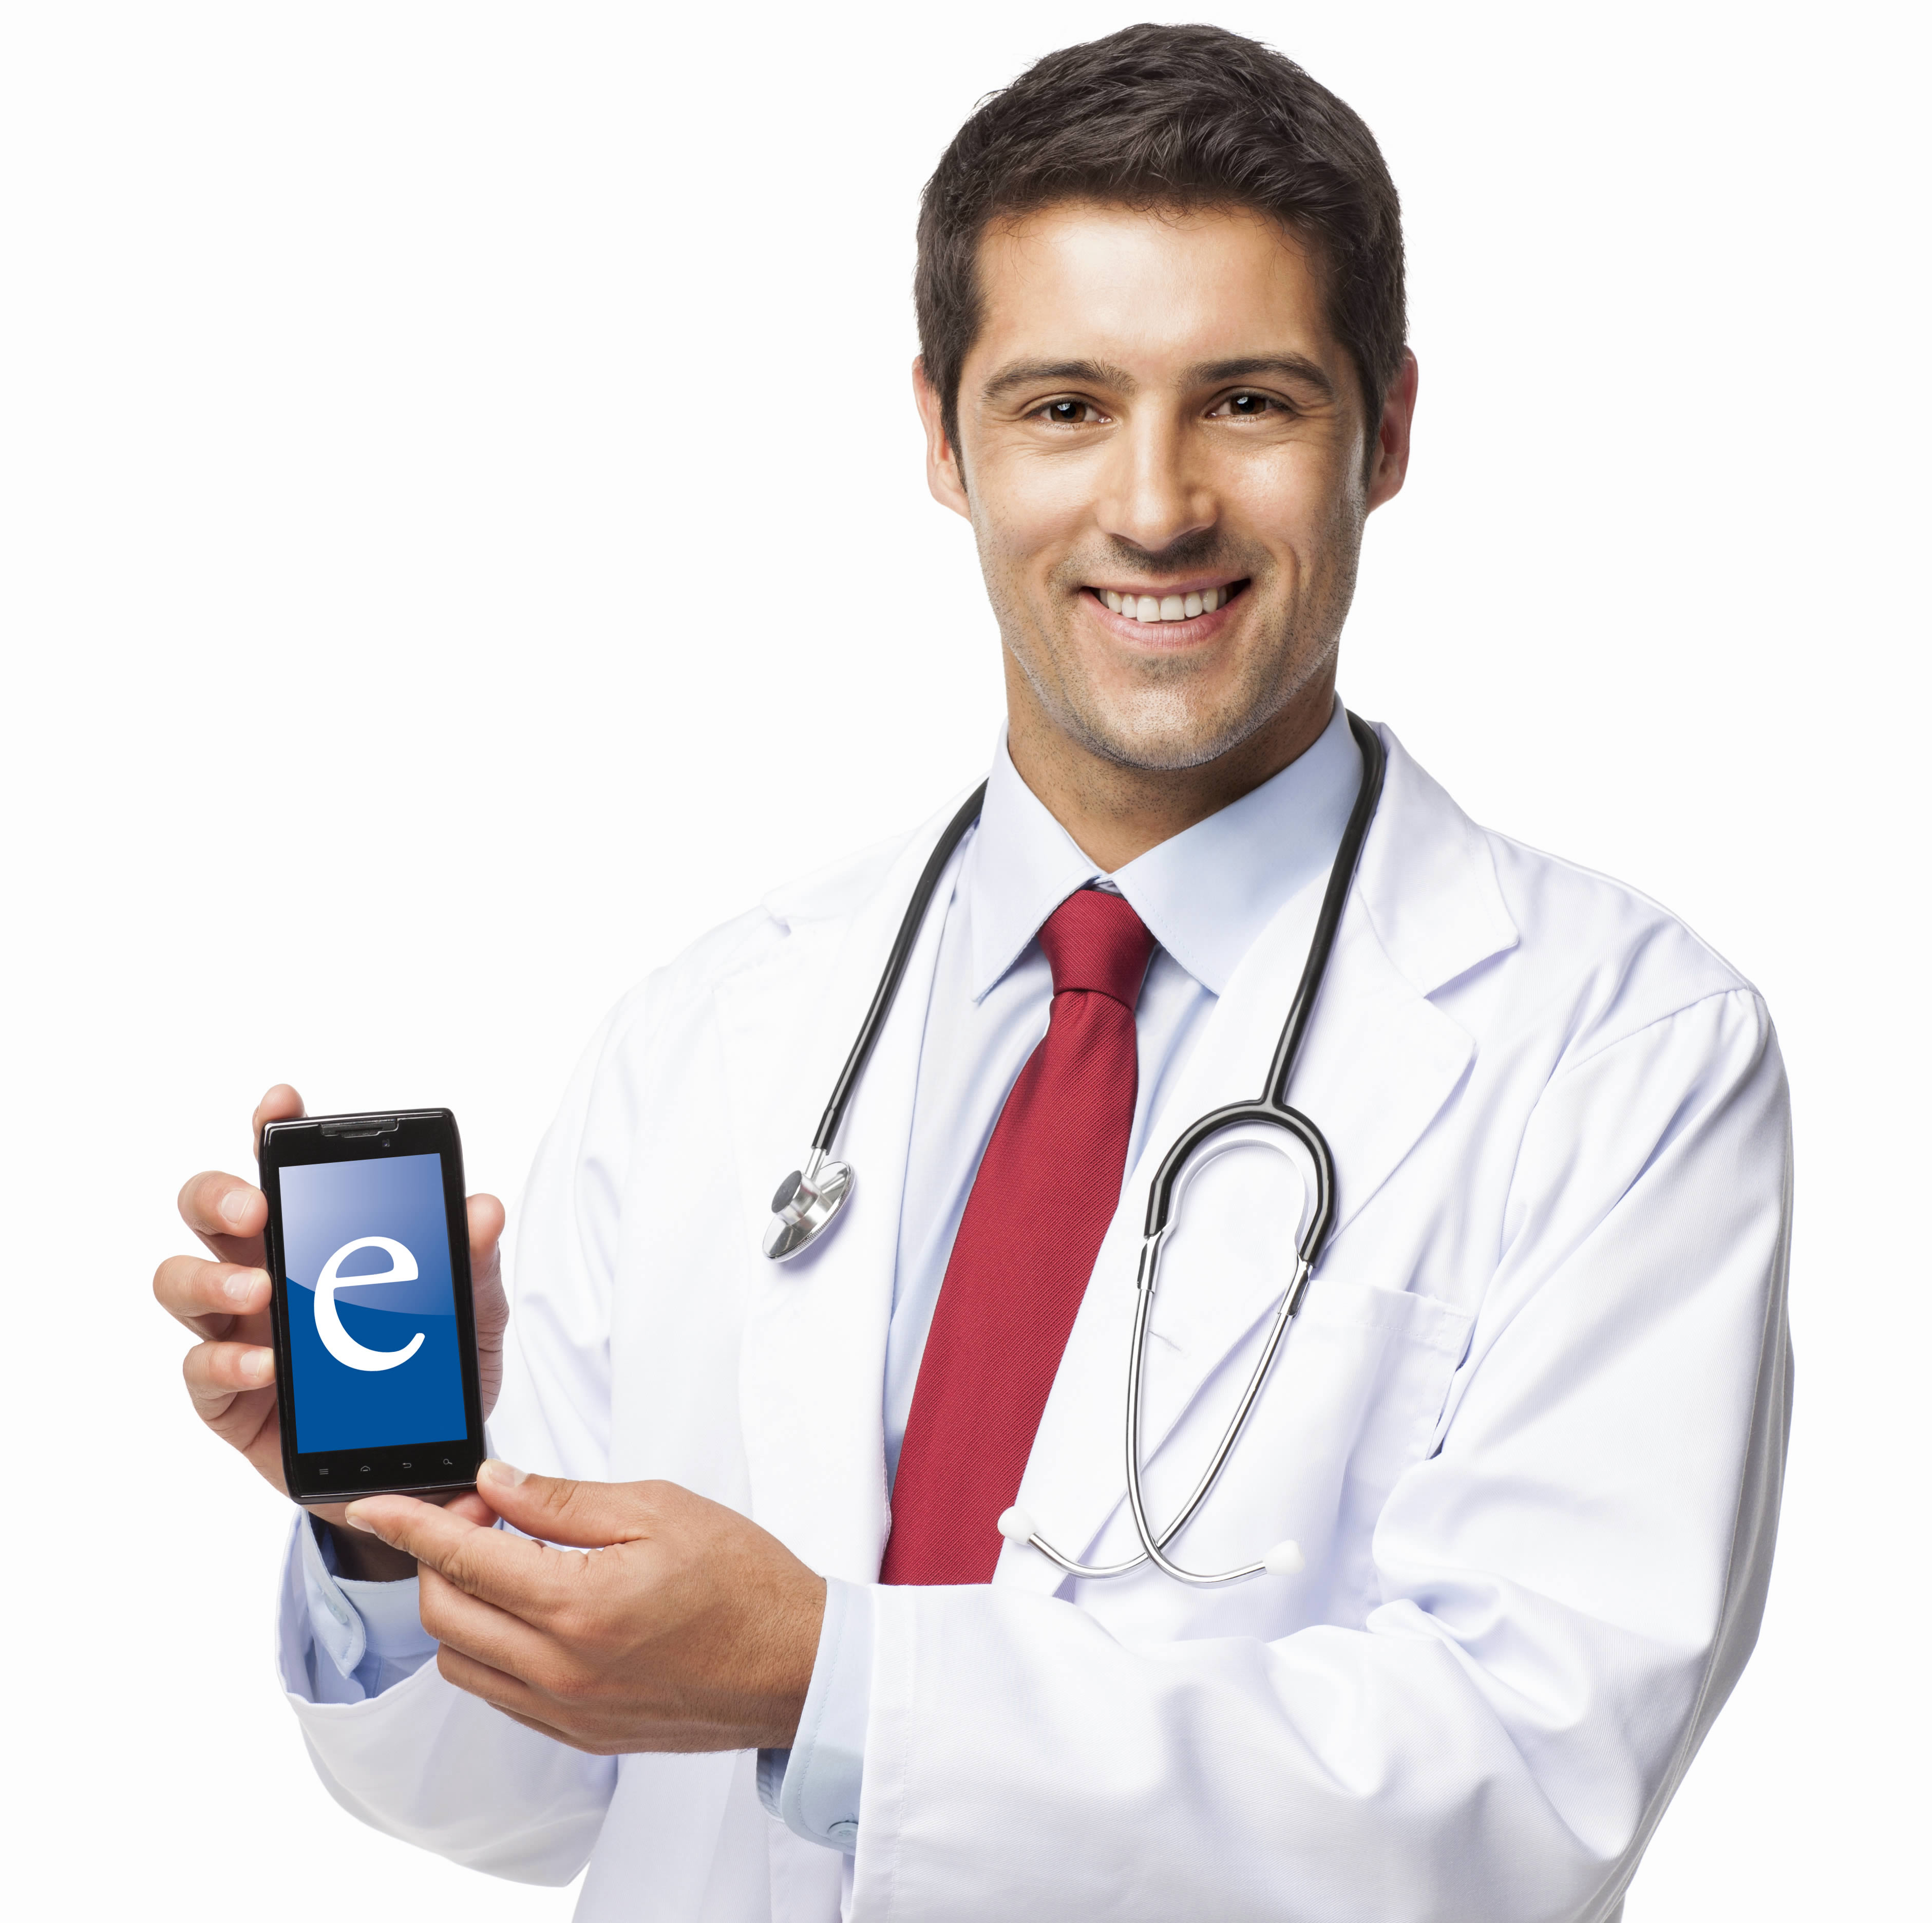 TopTrack encourages doctor-patient communication